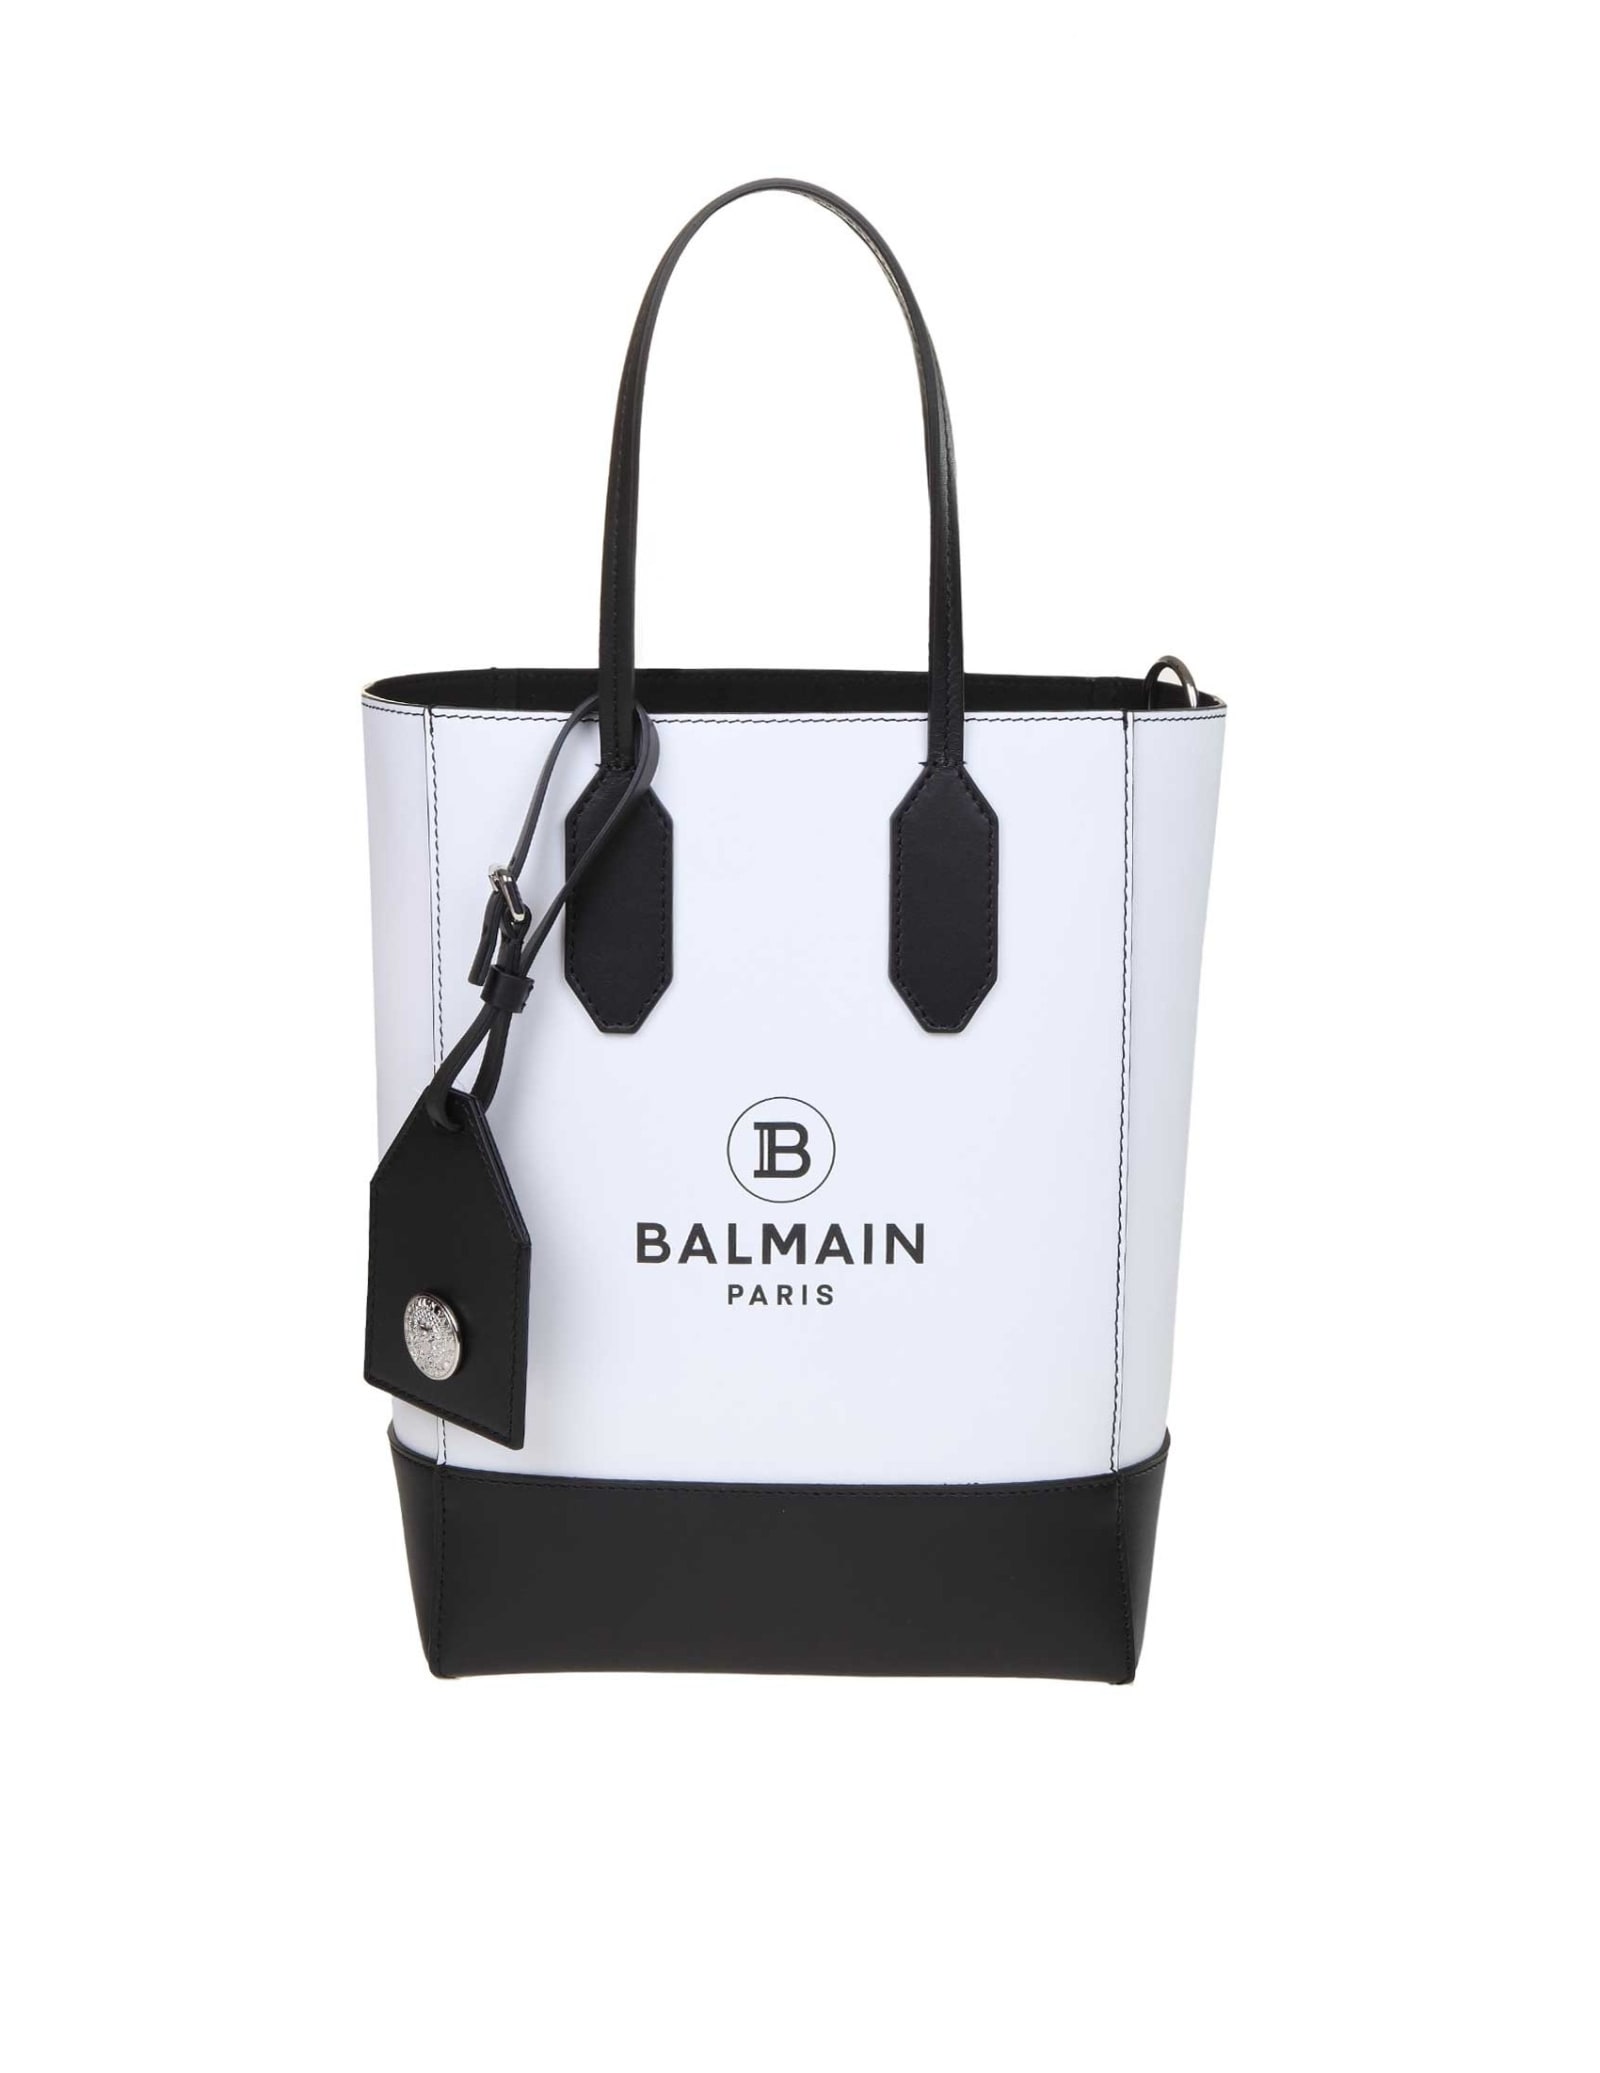 BALMAIN SMALL TOTE BAG IN WHITE CALFSKIN,11221981